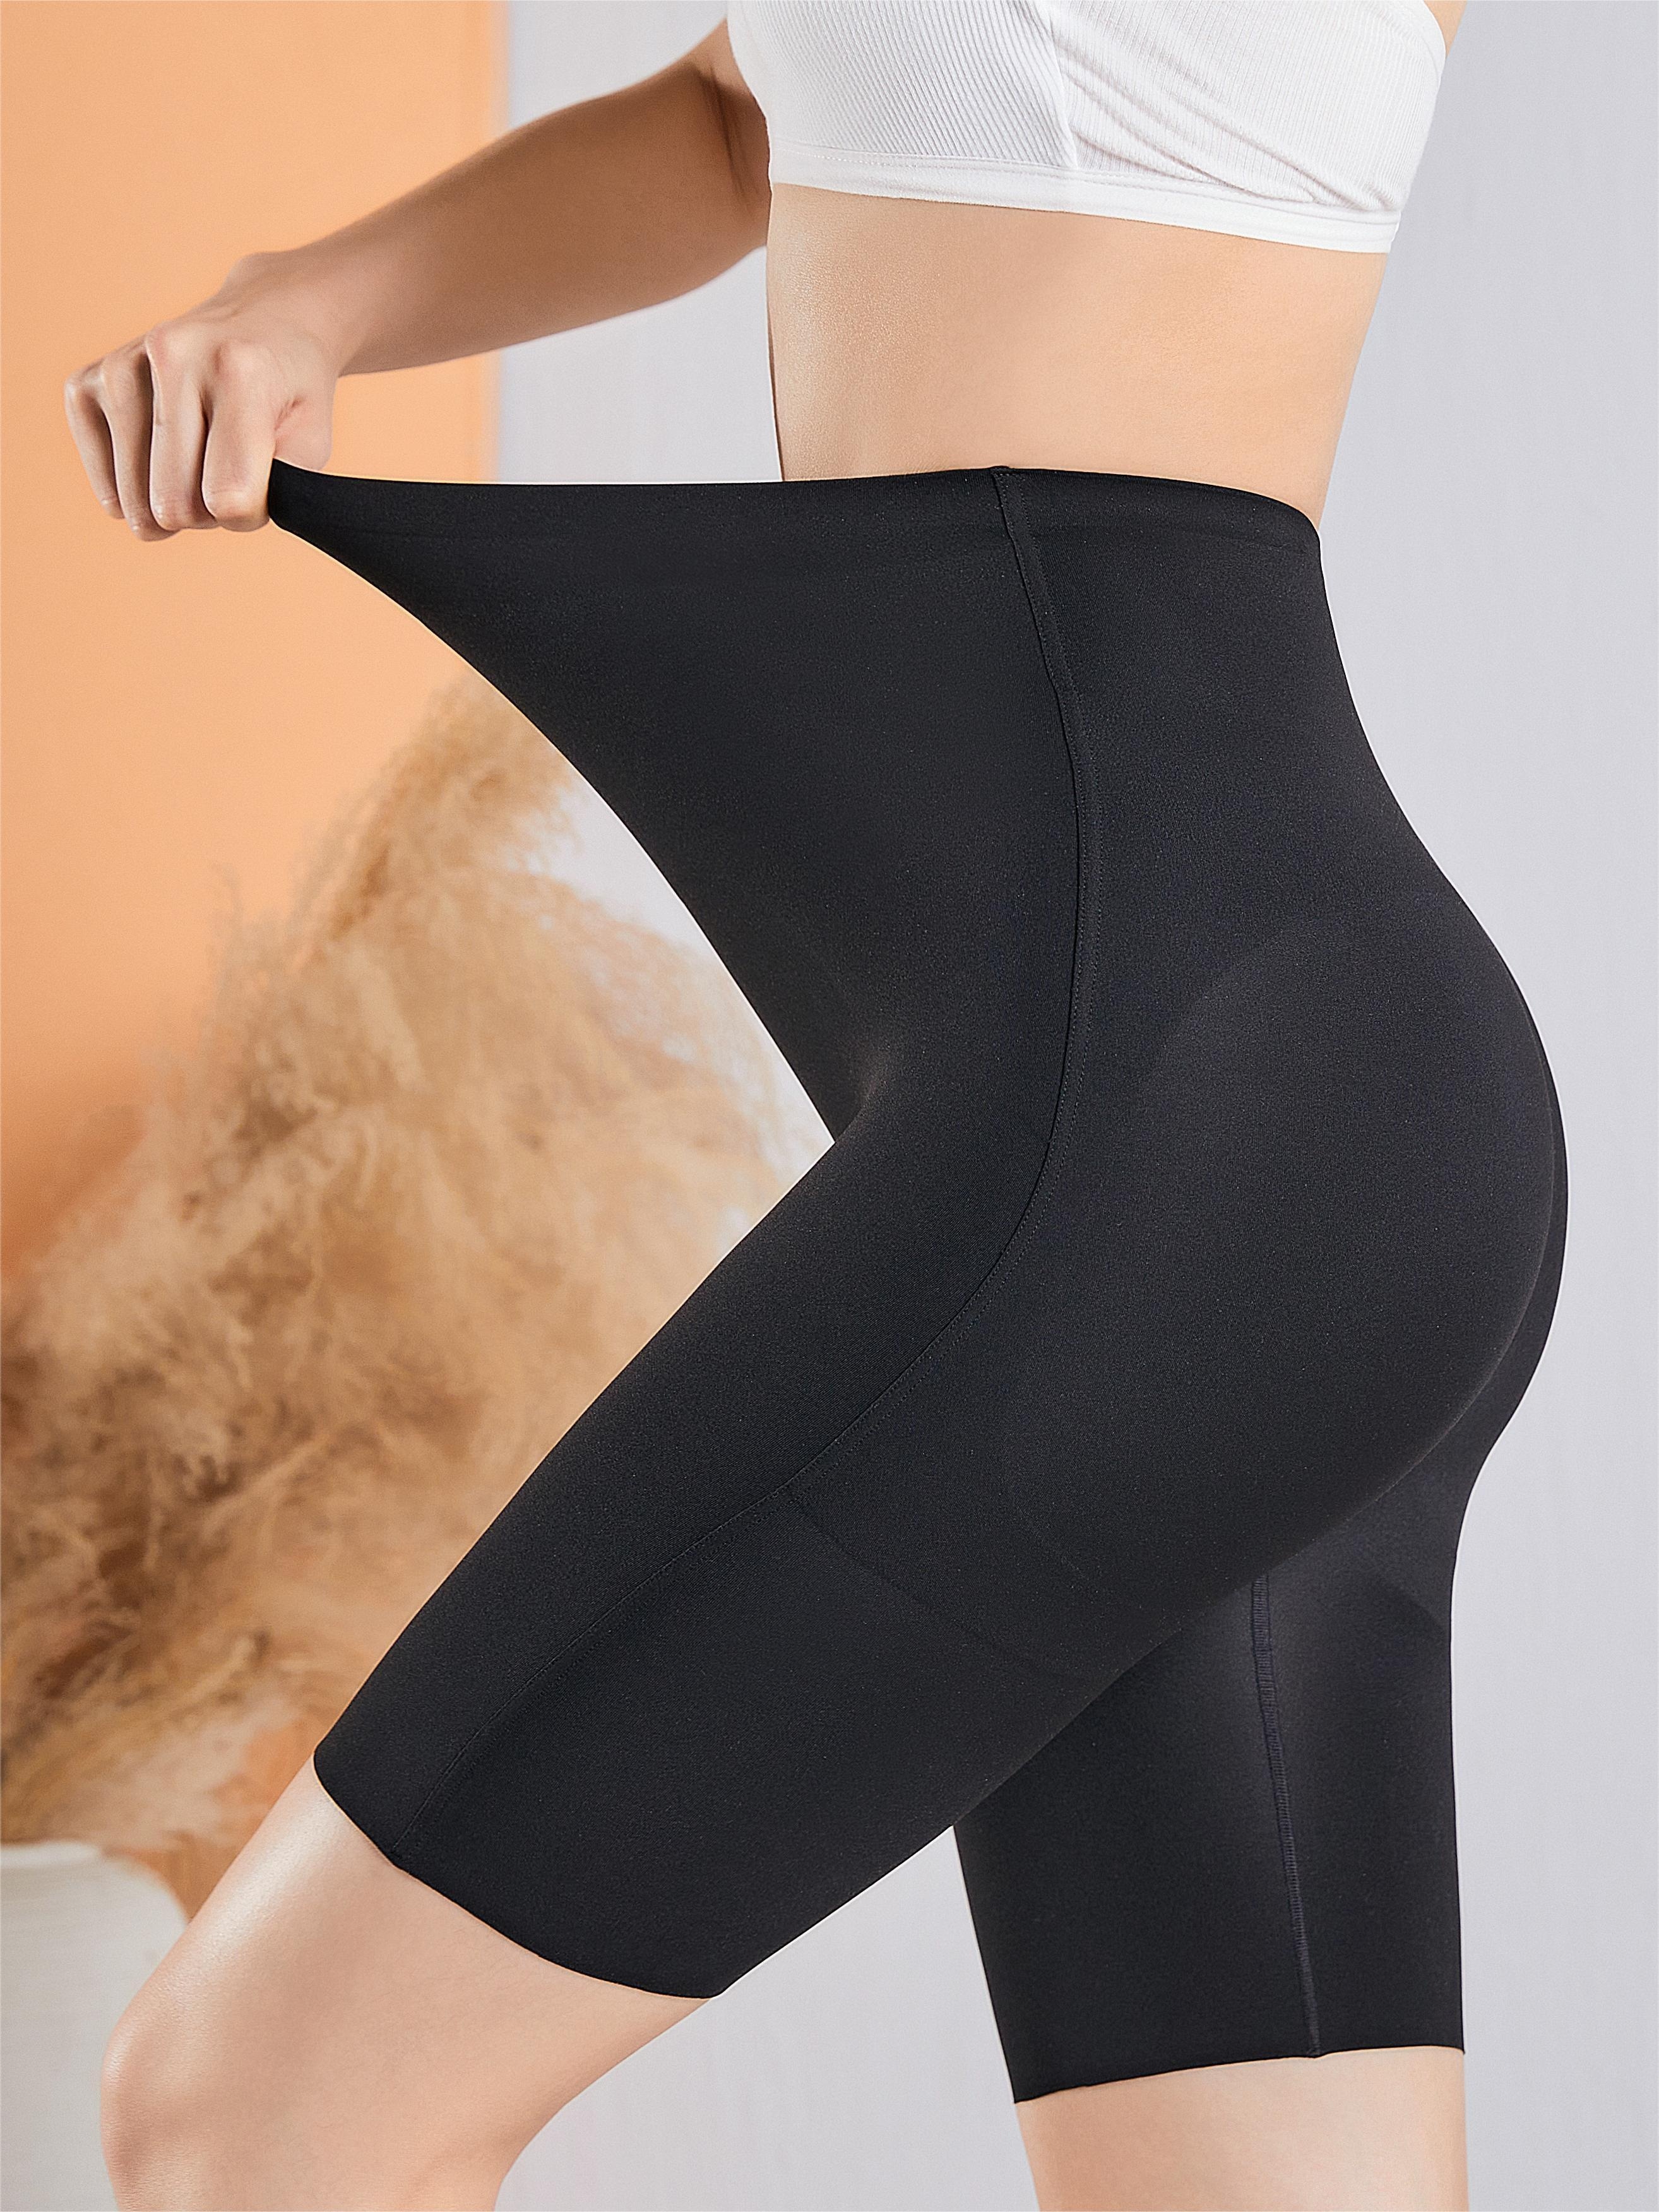 Simple Seamless Plain Black Butt Lifting Shaping Shorts, High Waist Tummy  Control Breathable Gym Fitness Boyshort Panties, Women's Underwear & Shapewe